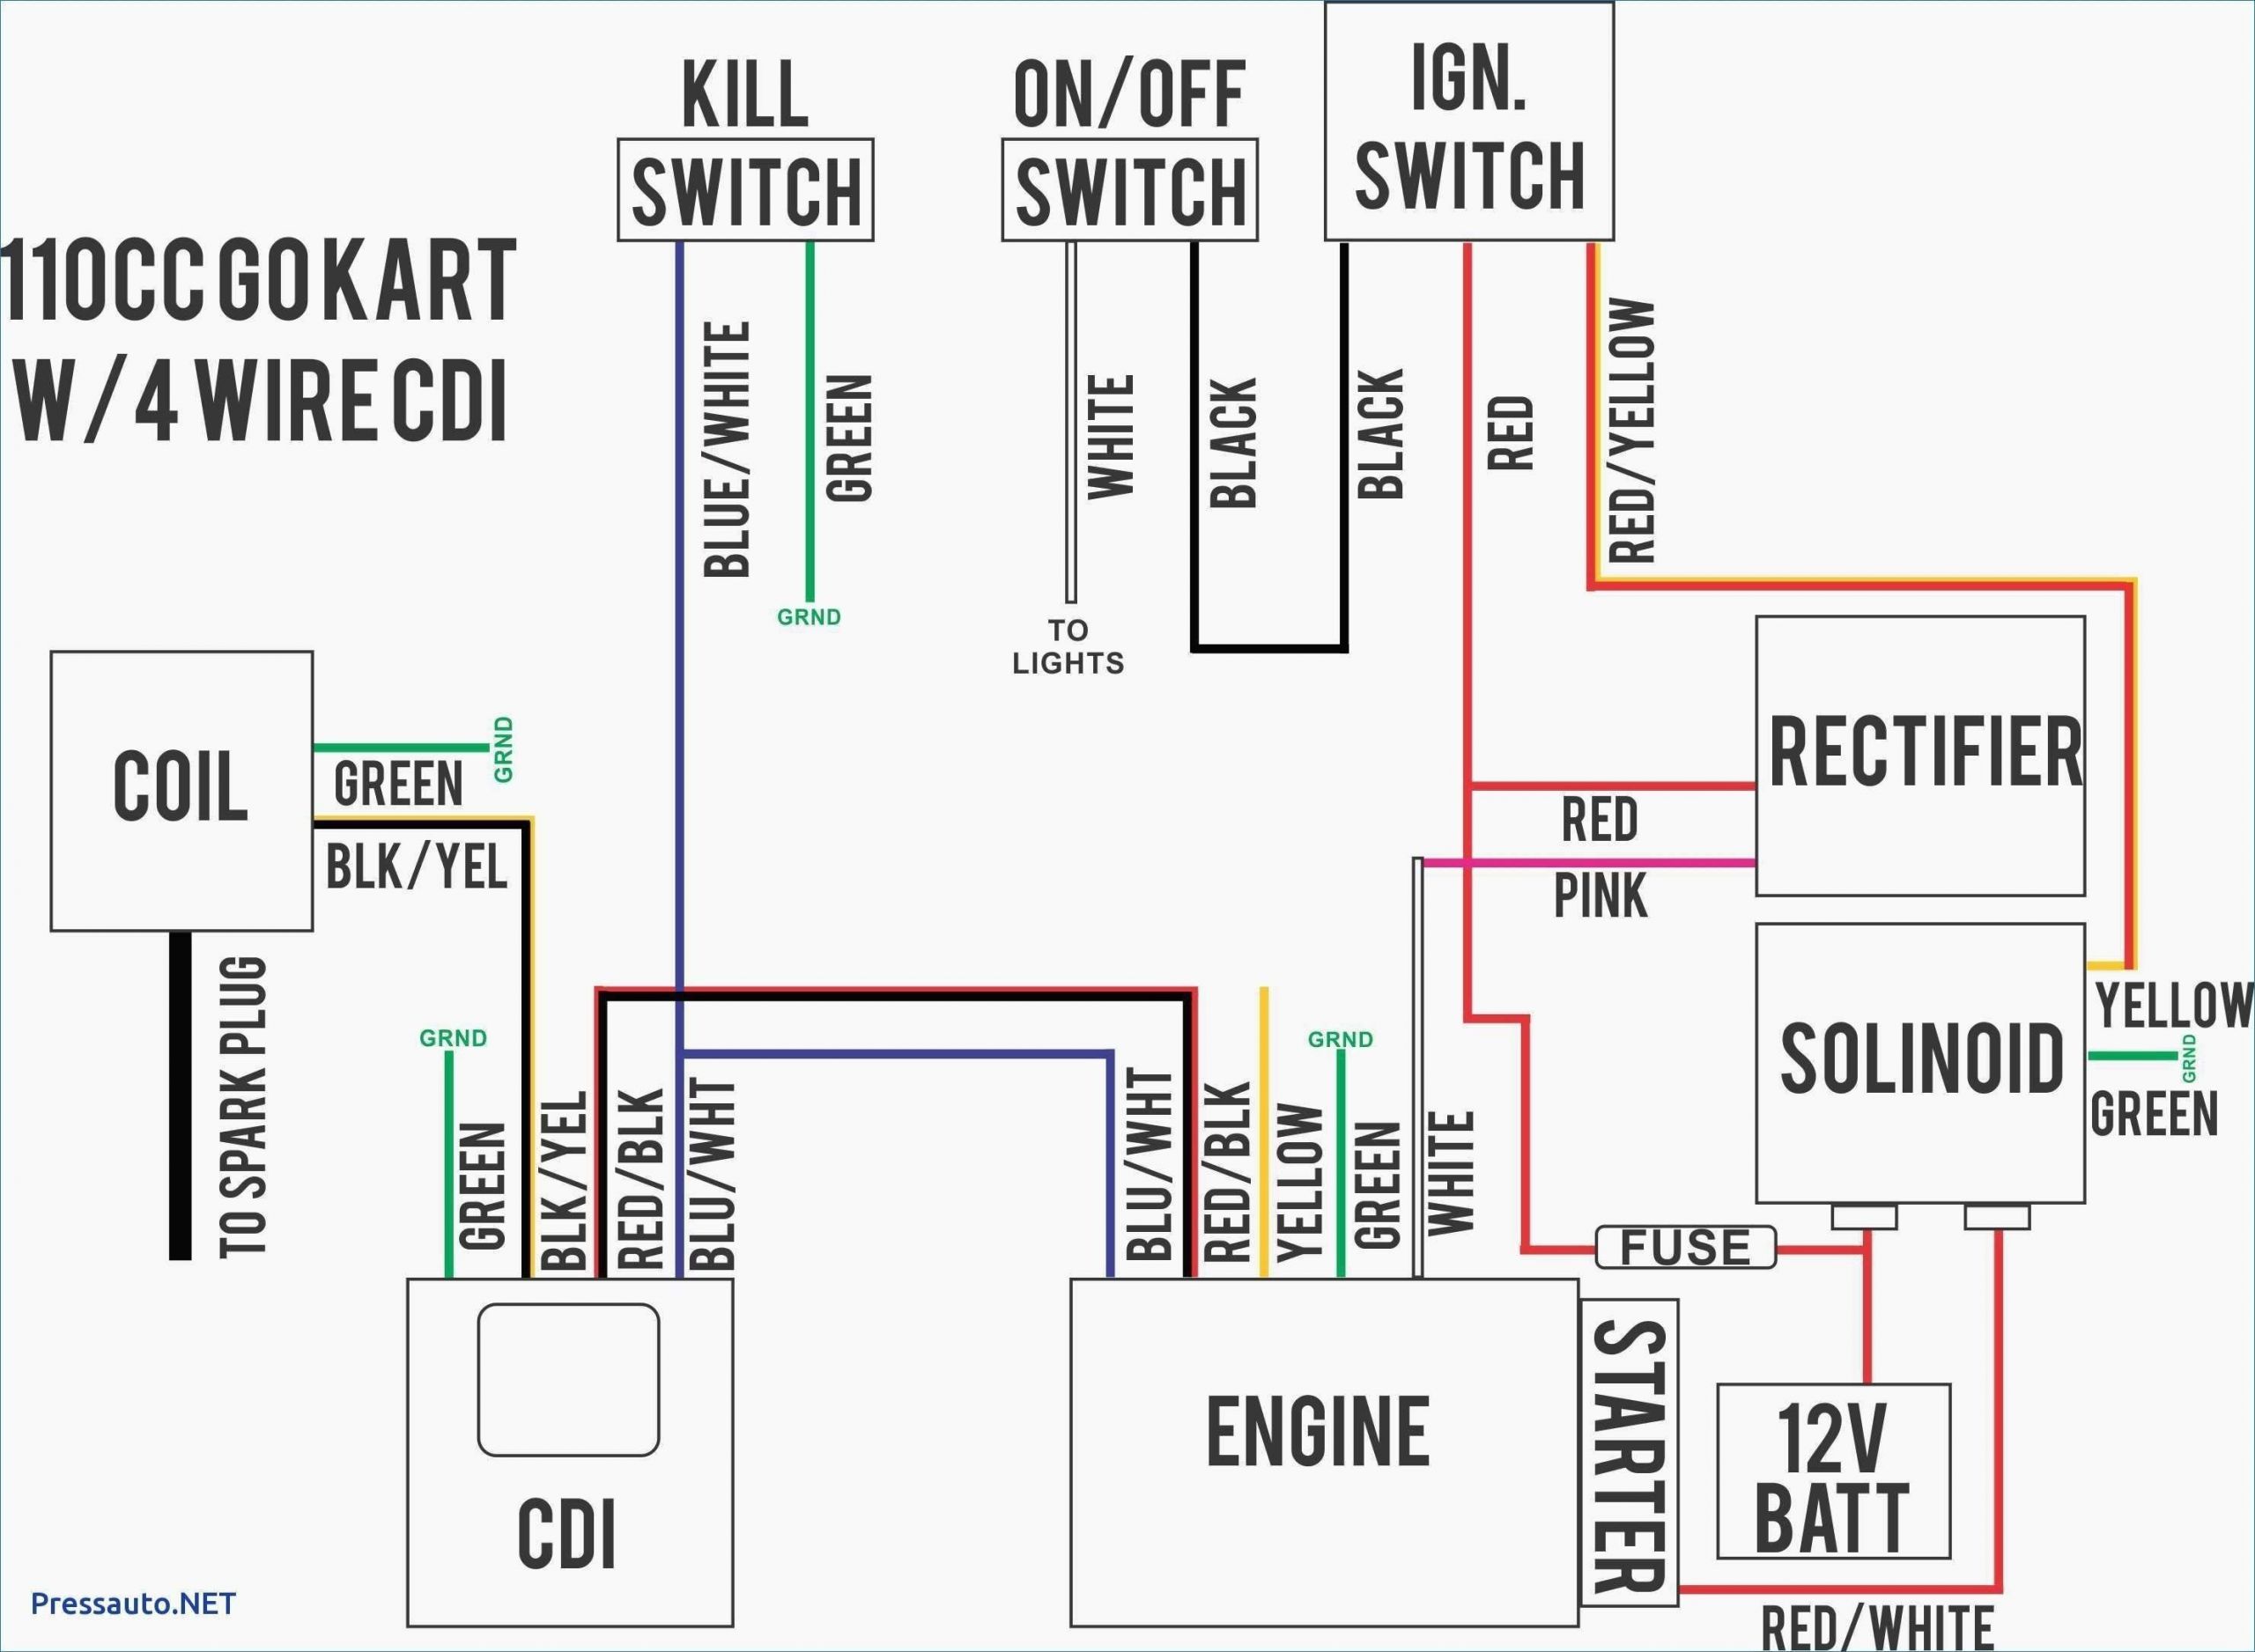 John Deere E100 Electrical Schematic Razor E100 Wiring Schematic Of John Deere E100 Electrical Schematic